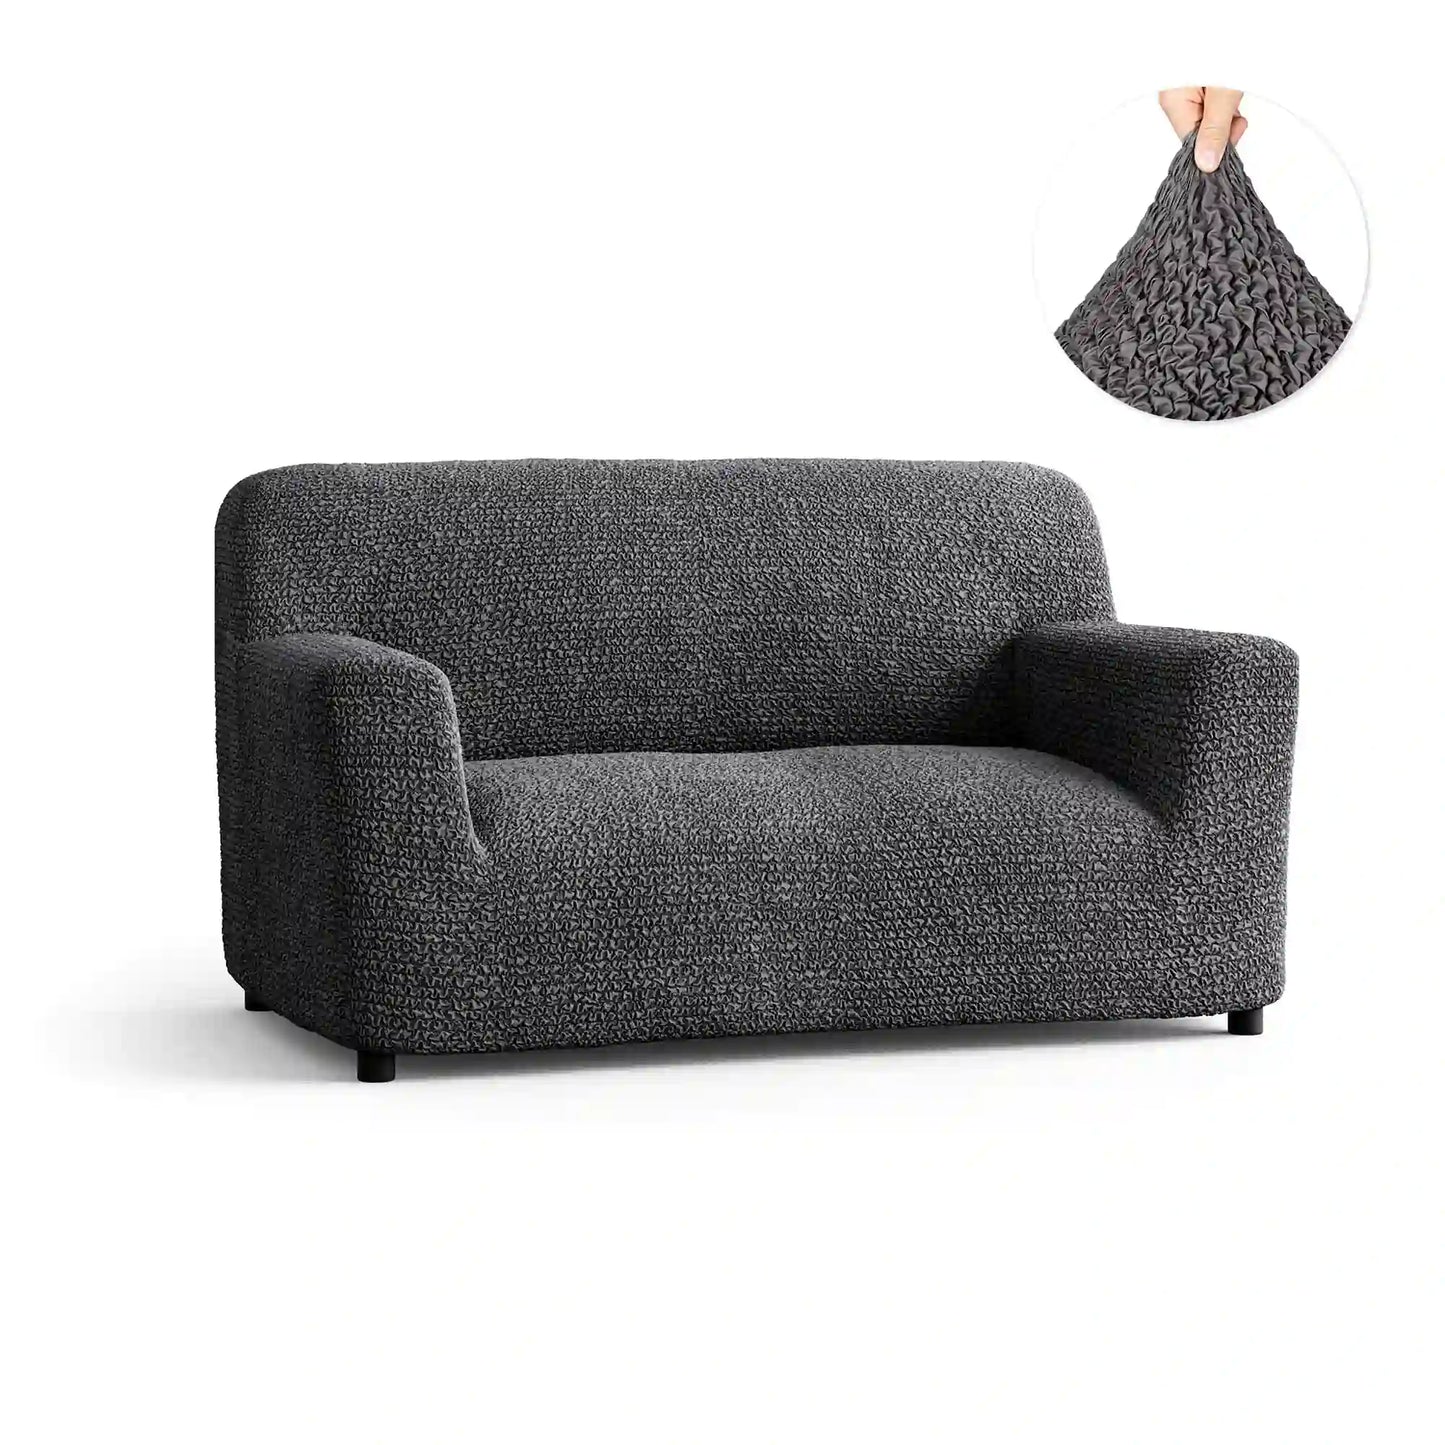 2 Seater Sofa Cover - Charcoal, Microfibra